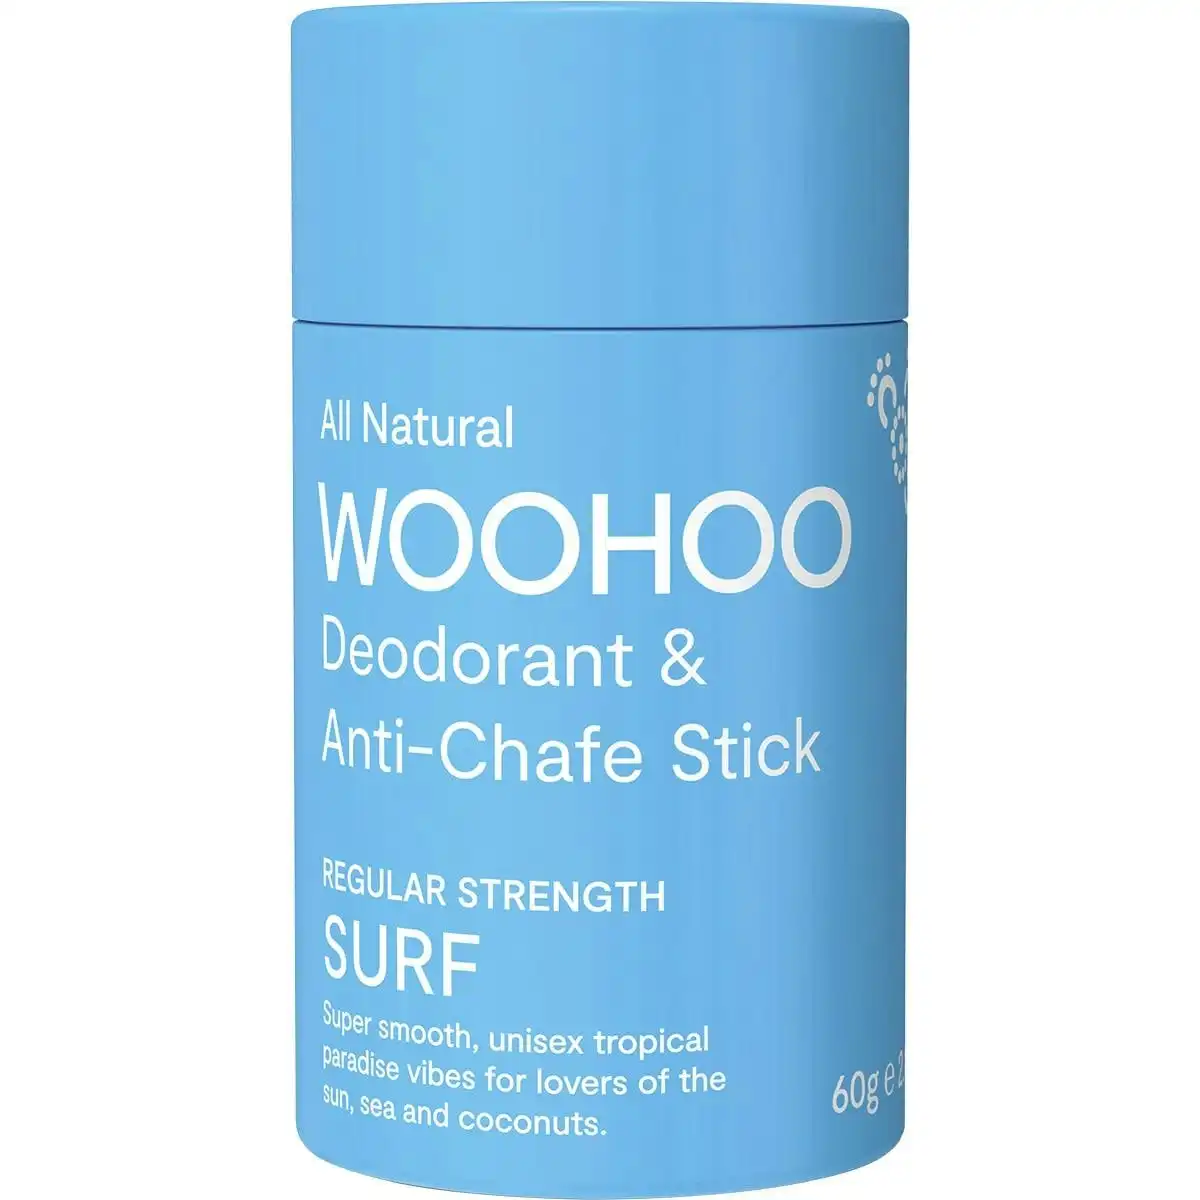 Woohoo Body Deodorant & Anti-Chafe Stick Surf - Regular Strength 60g